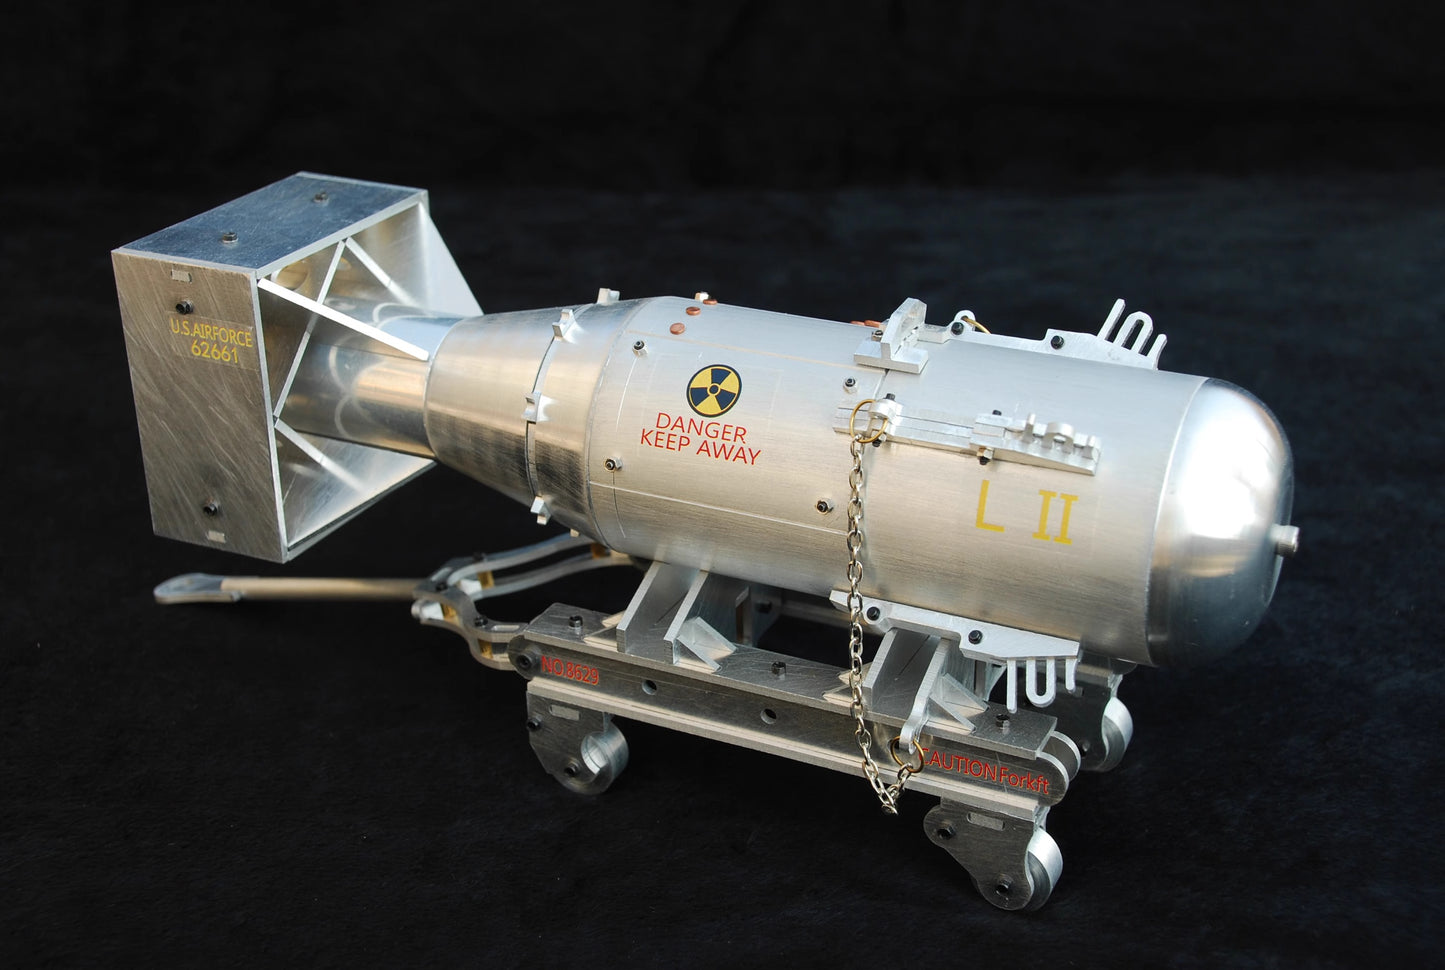 1/12 Full Metal WWII American Little Boy Nuclear Bomb Assembly Model